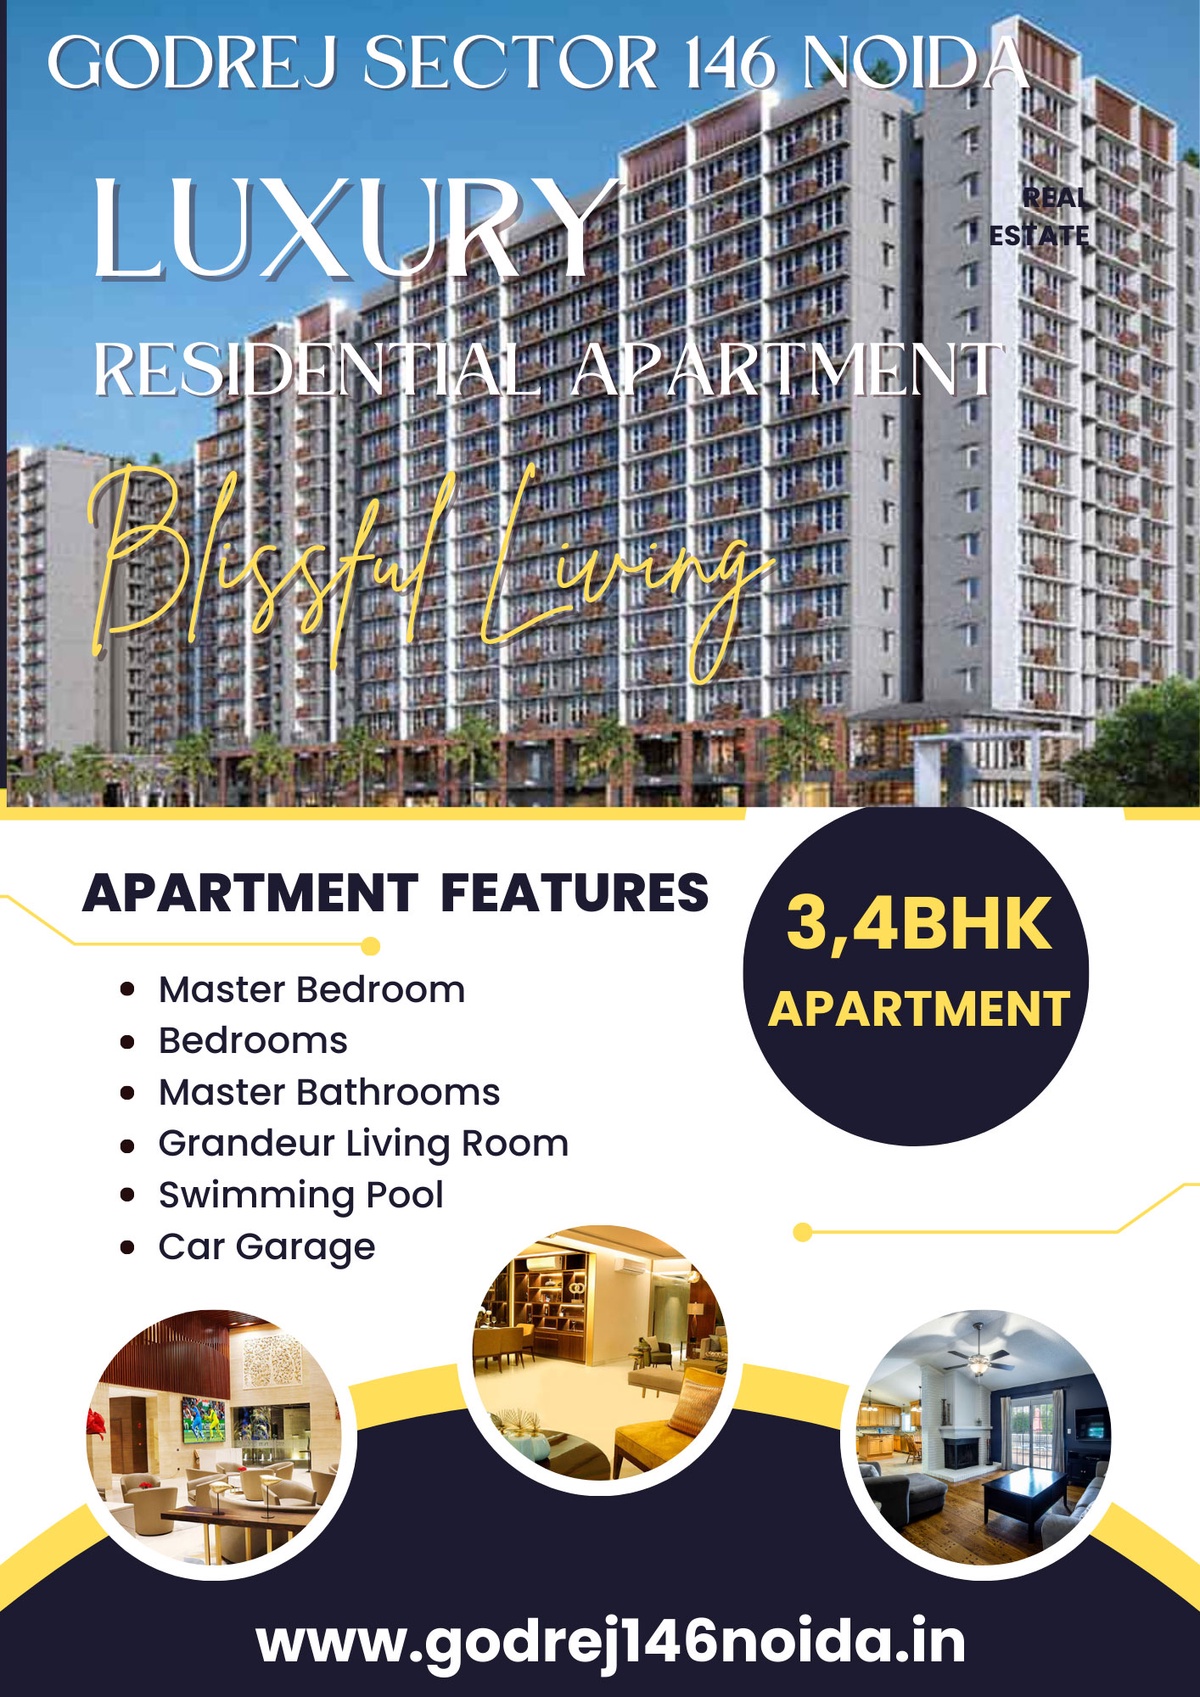 Godrej Sector 146 Noida-With Ultra Luxury 3,4 BHK Apartment